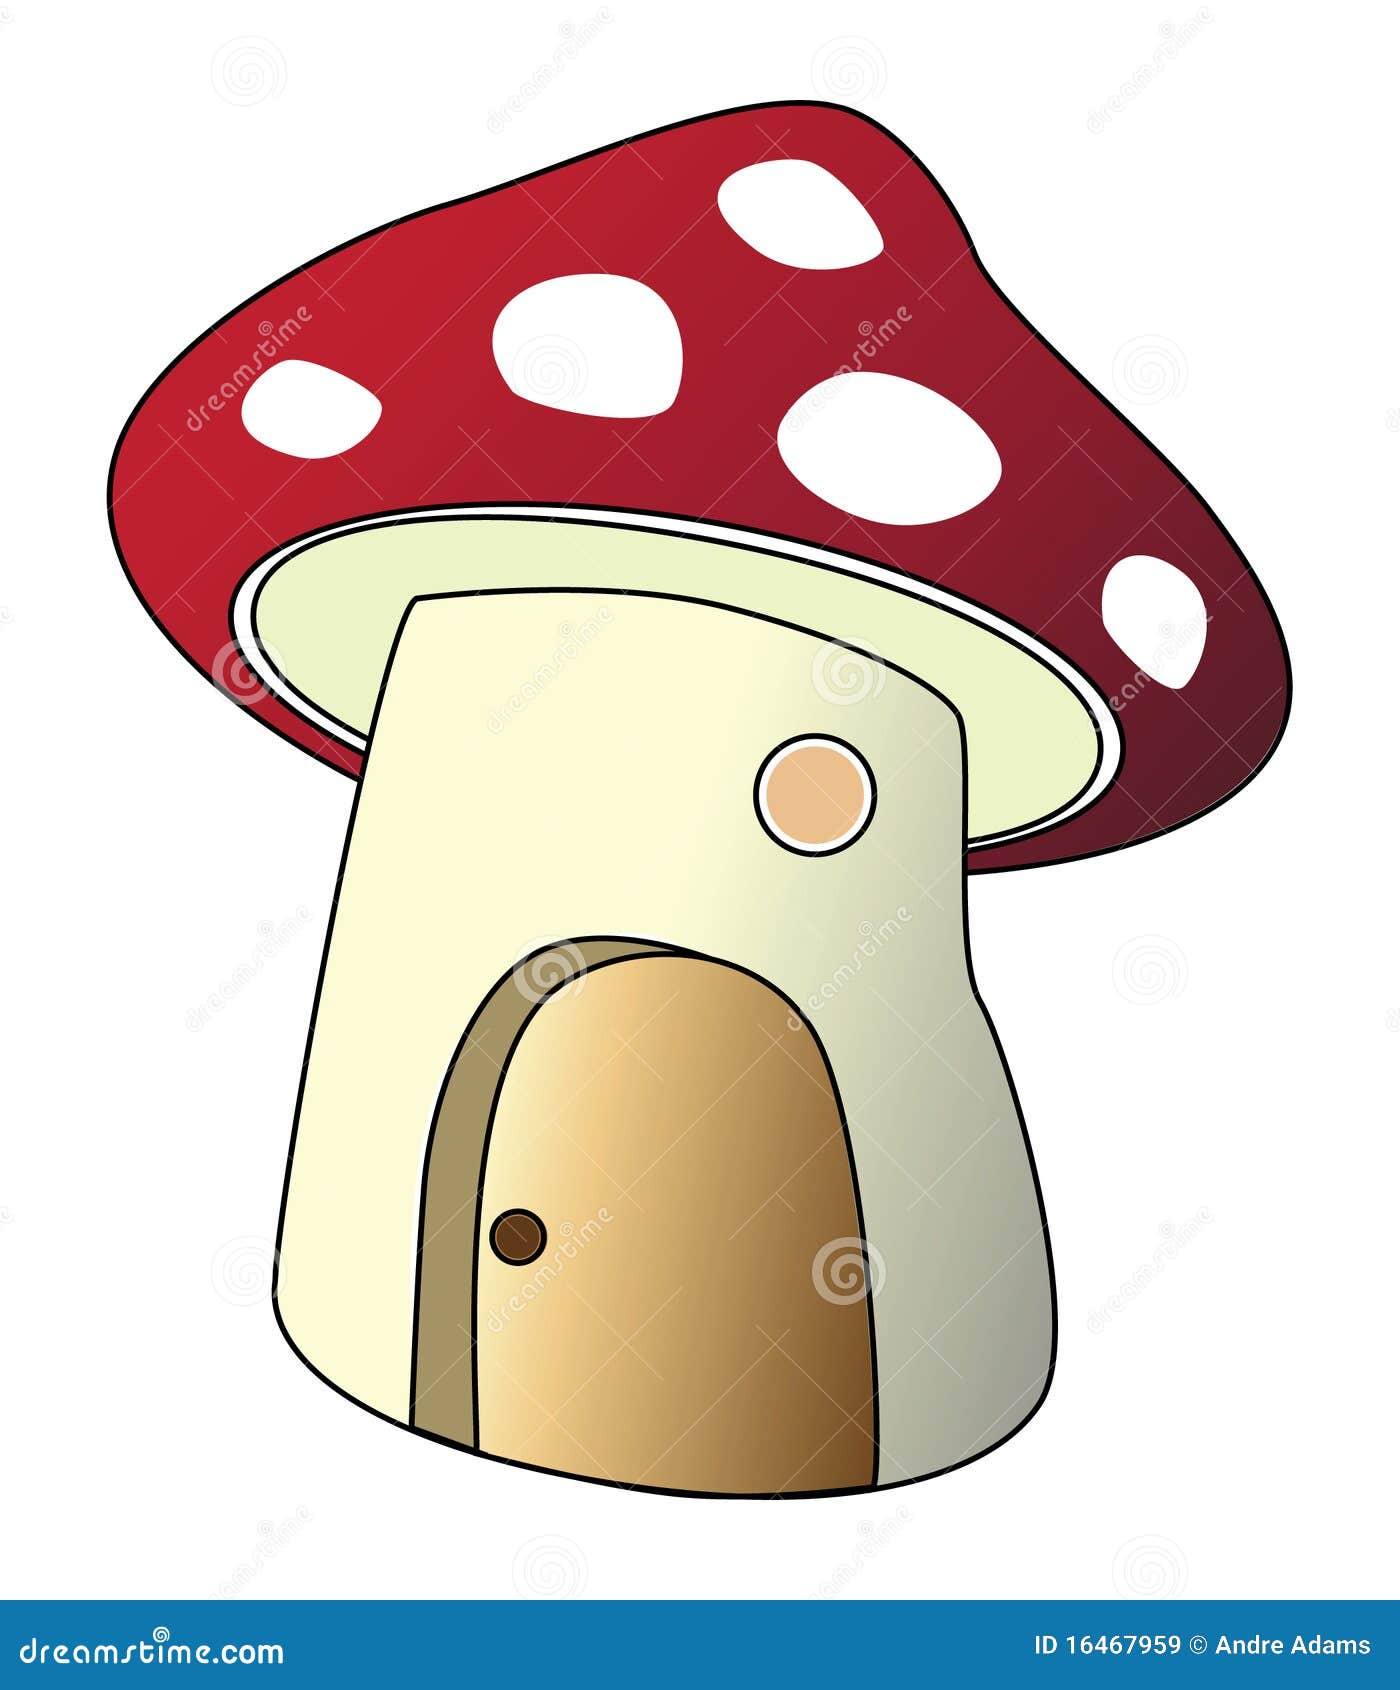 mushroom house clipart - photo #21